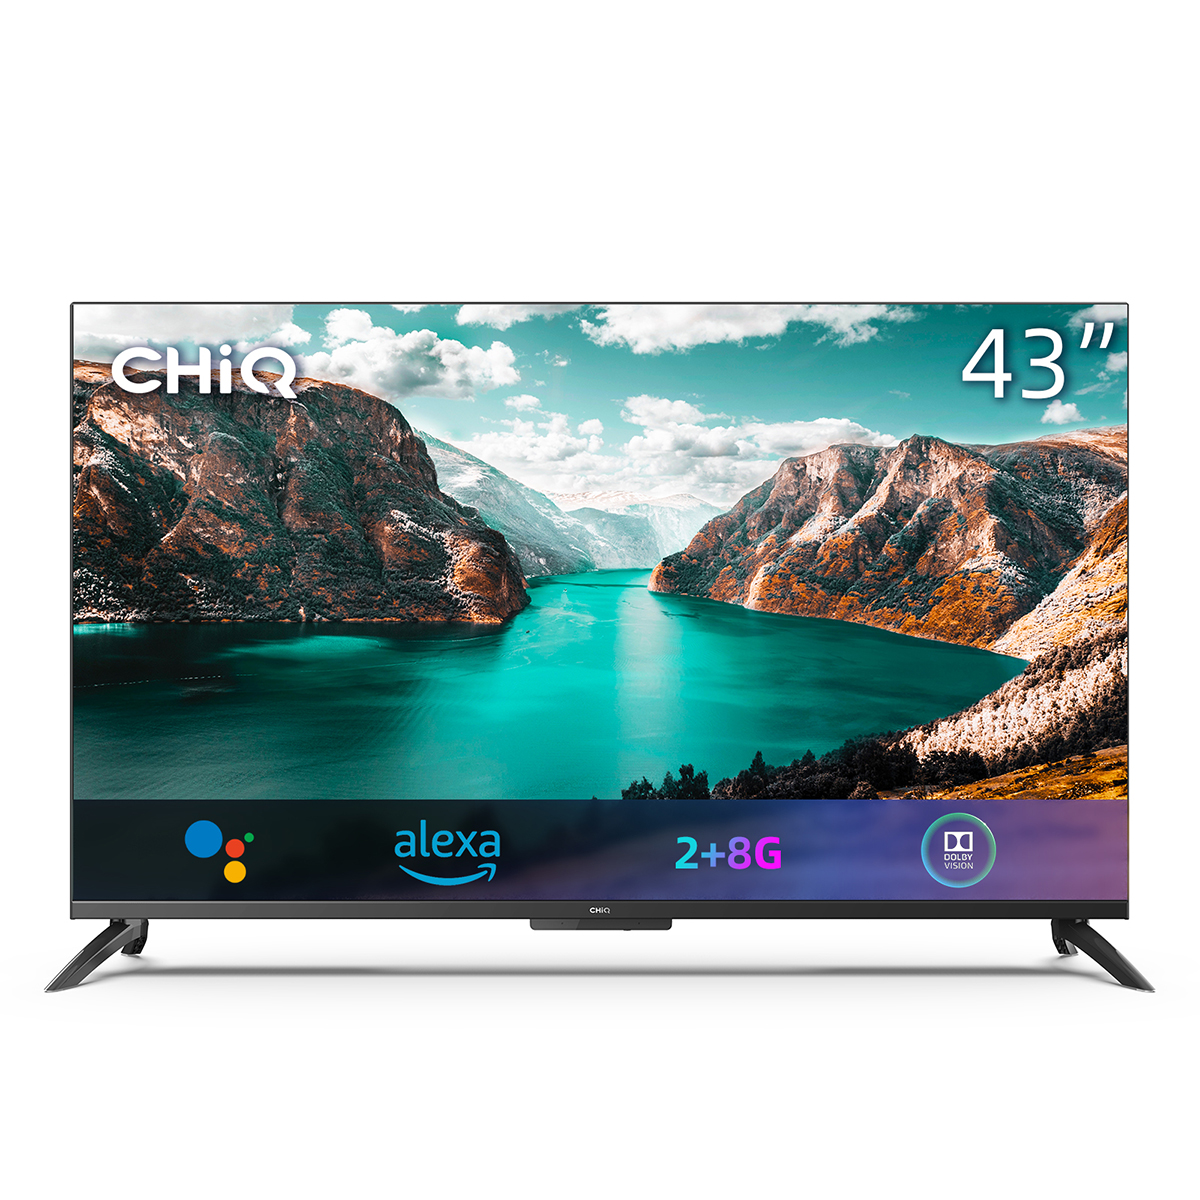 Chiq U43g7pf Televisor smart tv android 43 4k uhd hdr10 dolby vision audio 3 2